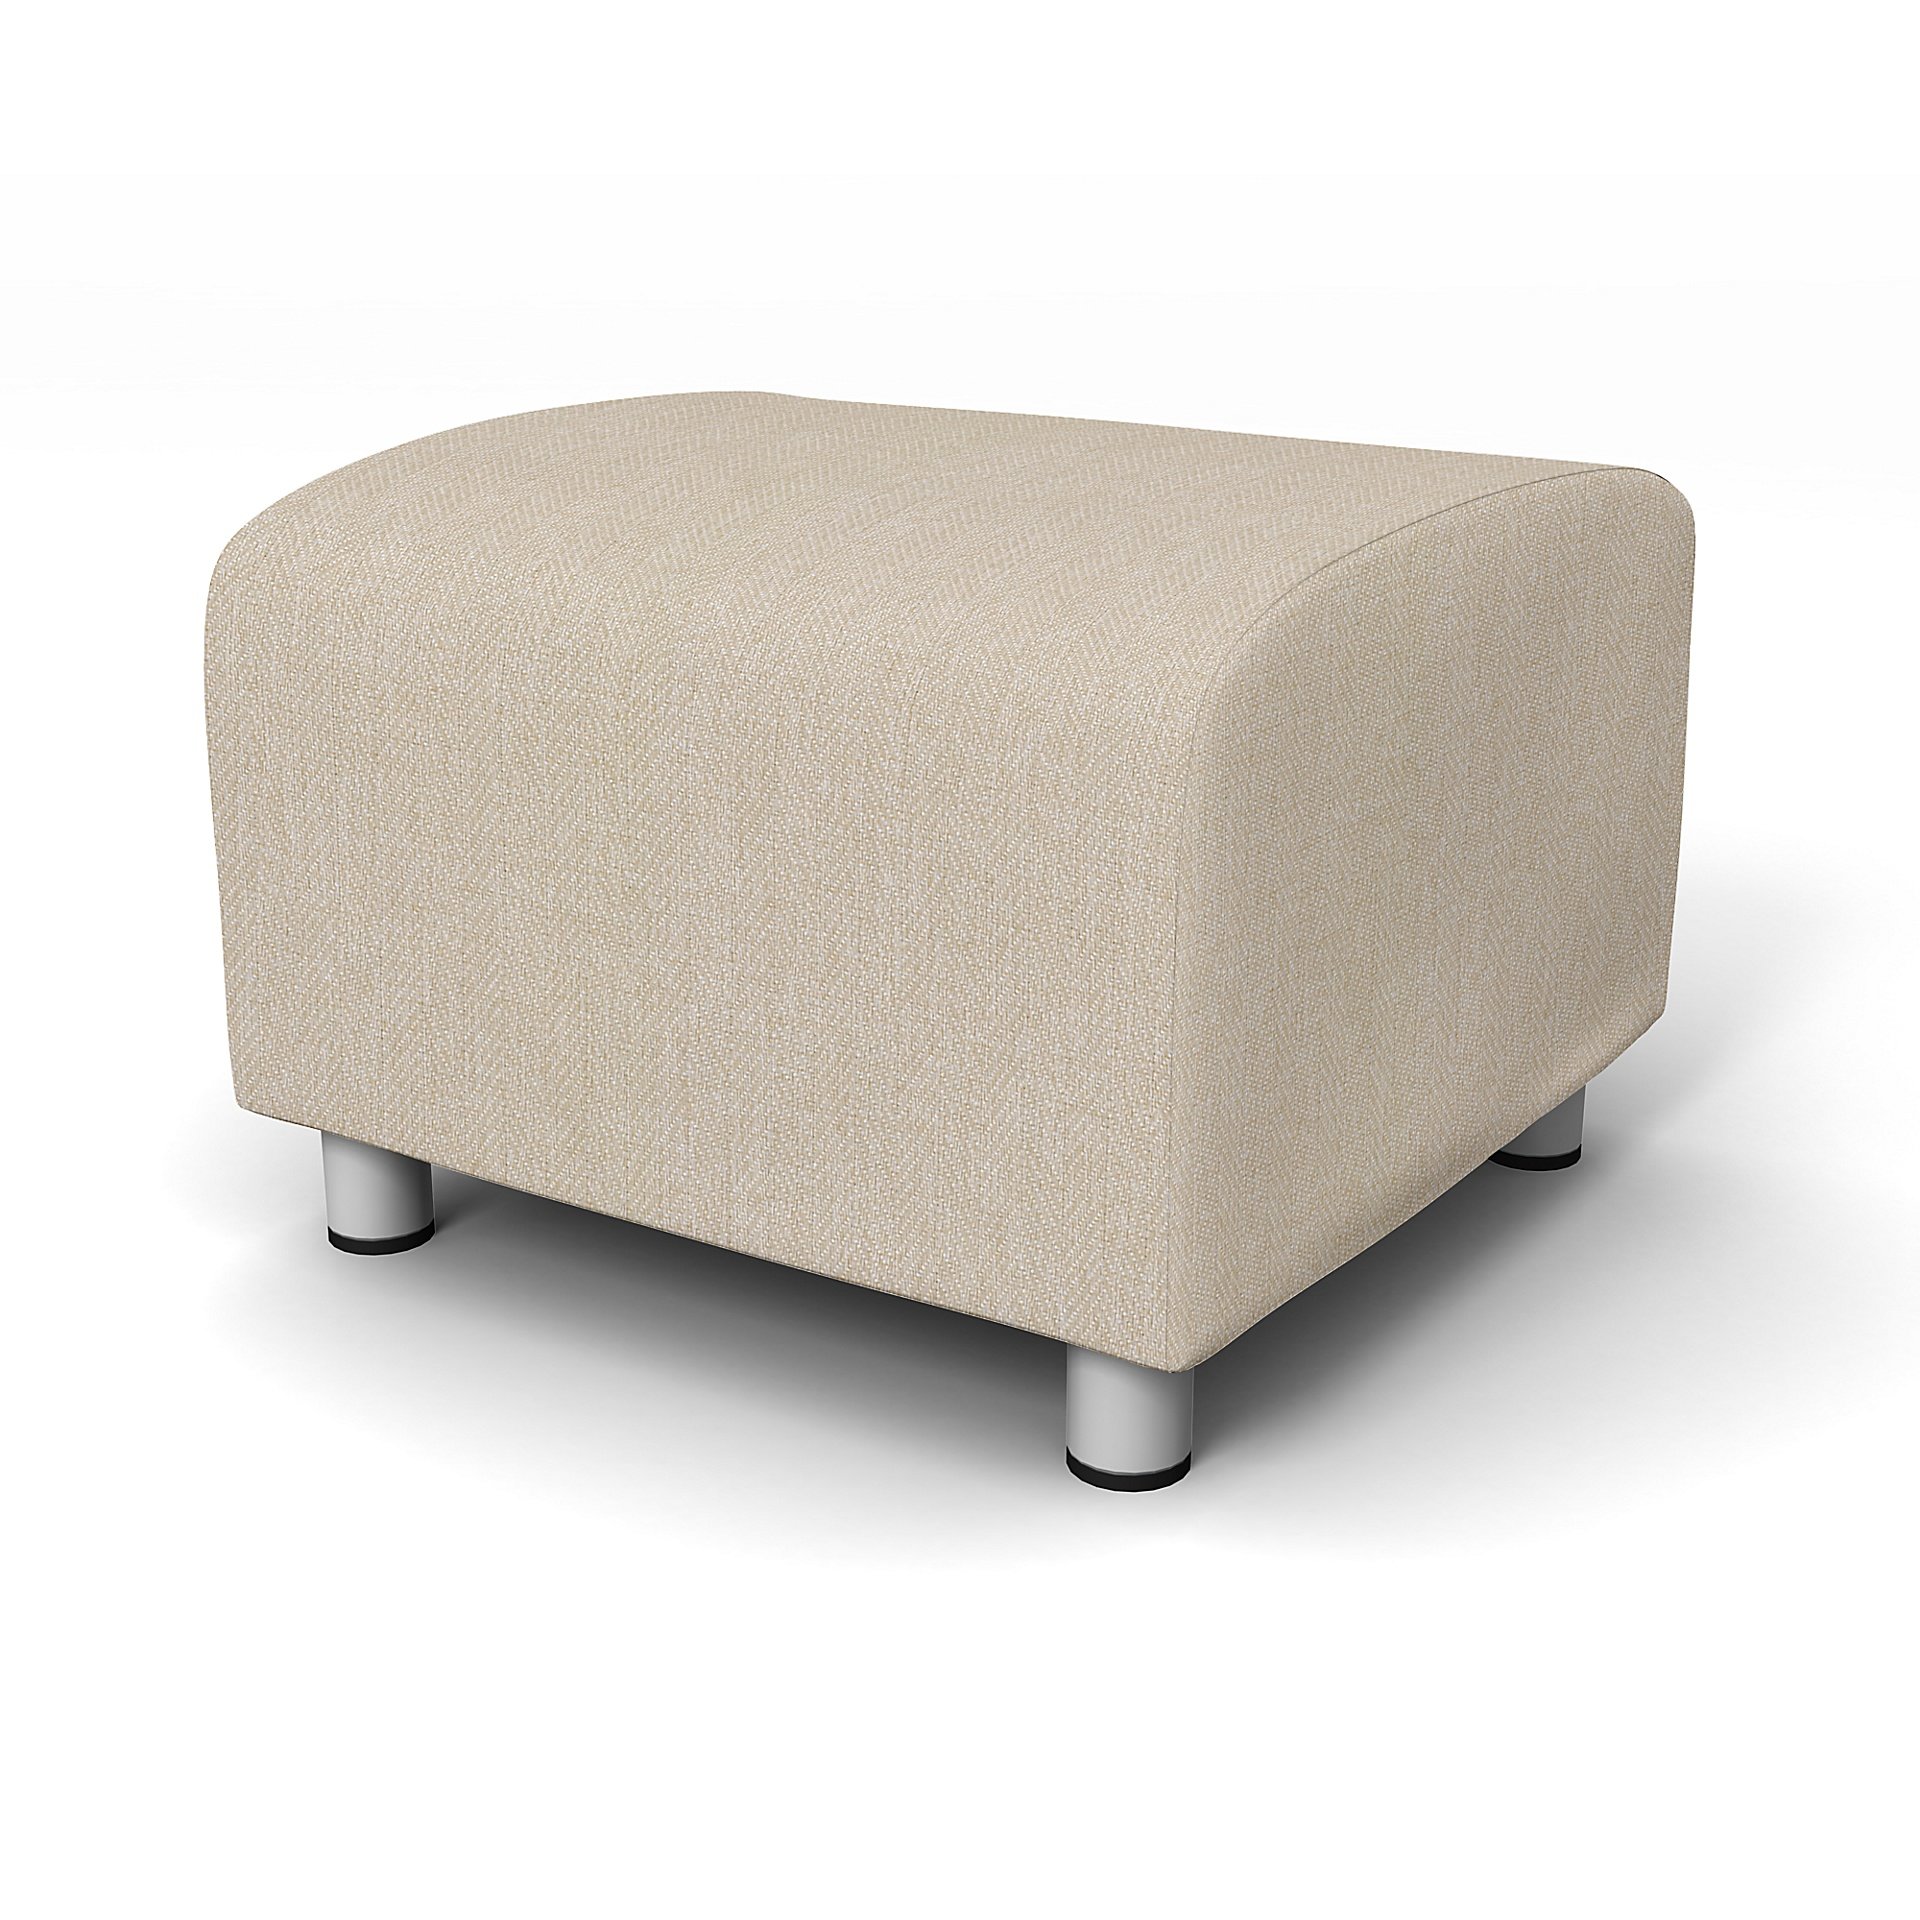 IKEA - Klippan Footstool Cover, Natural, Boucle & Texture - Bemz